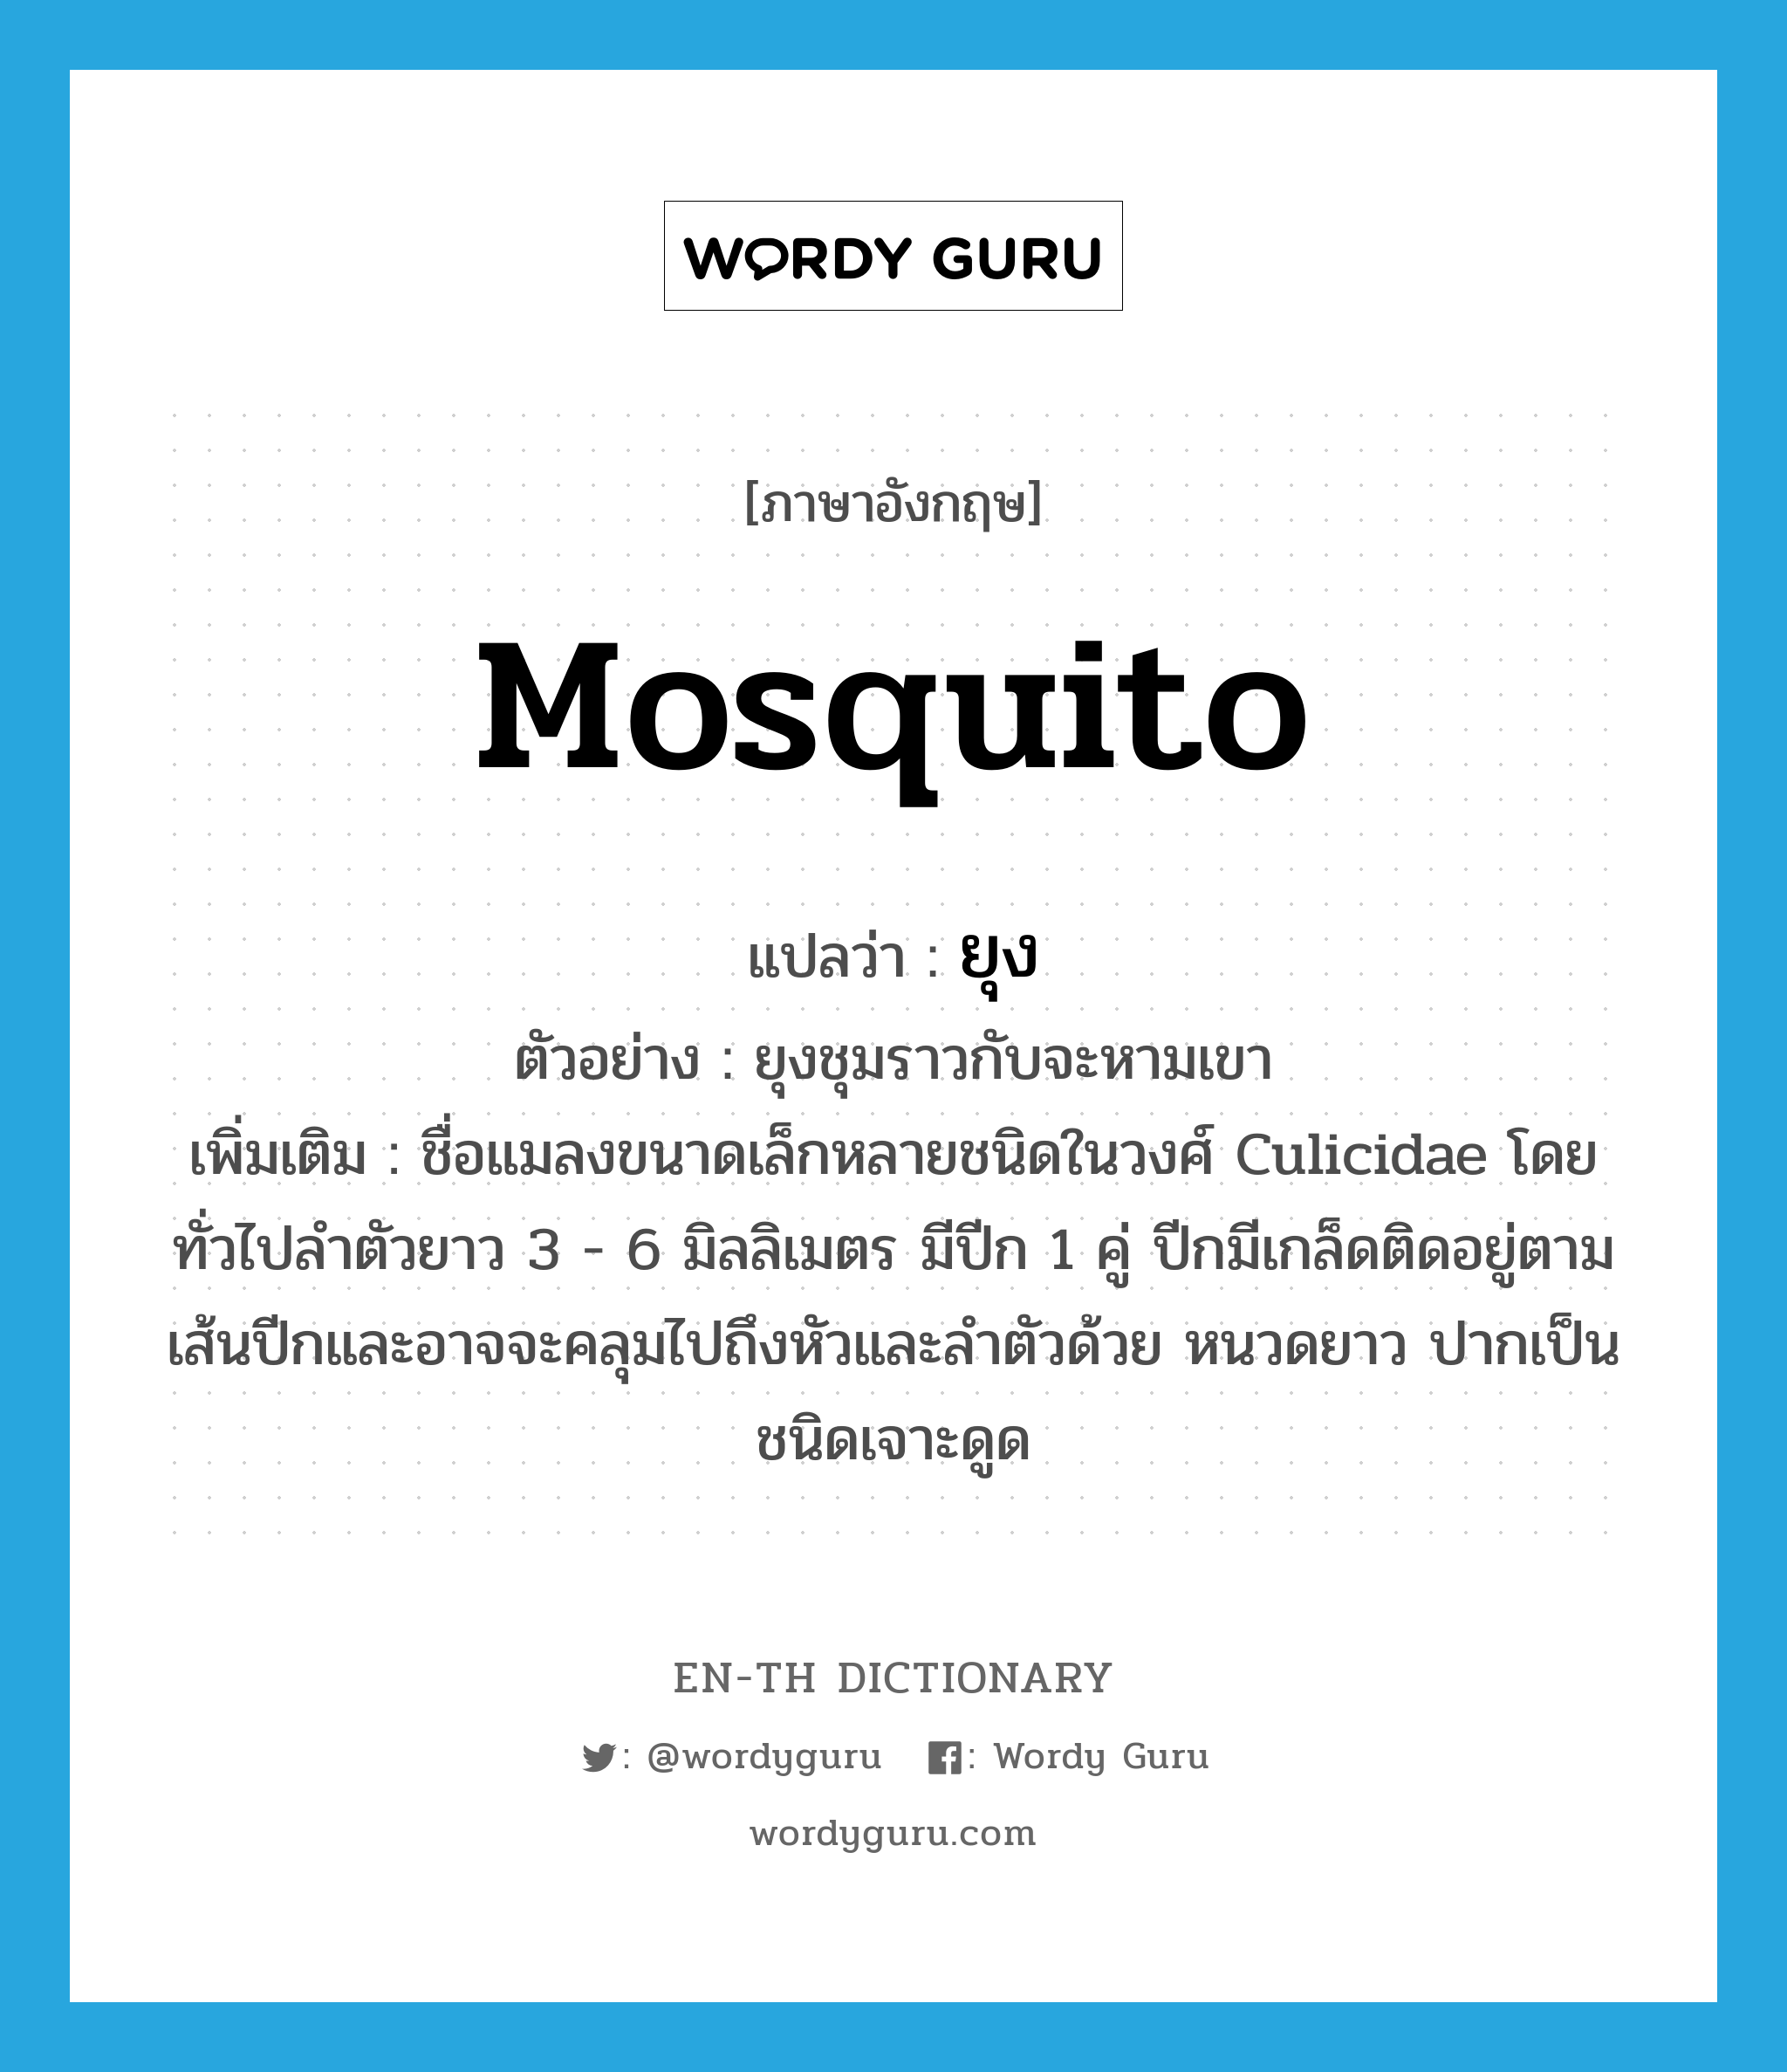 mosquito แปลว่า?, คำศัพท์ภาษาอังกฤษ mosquito แปลว่า ยุง ประเภท N ตัวอย่าง ยุงชุมราวกับจะหามเขา เพิ่มเติม ชื่อแมลงขนาดเล็กหลายชนิดในวงศ์ Culicidae โดยทั่วไปลำตัวยาว 3 - 6 มิลลิเมตร มีปีก 1 คู่ ปีกมีเกล็ดติดอยู่ตามเส้นปีกและอาจจะคลุมไปถึงหัวและลำตัวด้วย หนวดยาว ปากเป็นชนิดเจาะดูด หมวด N